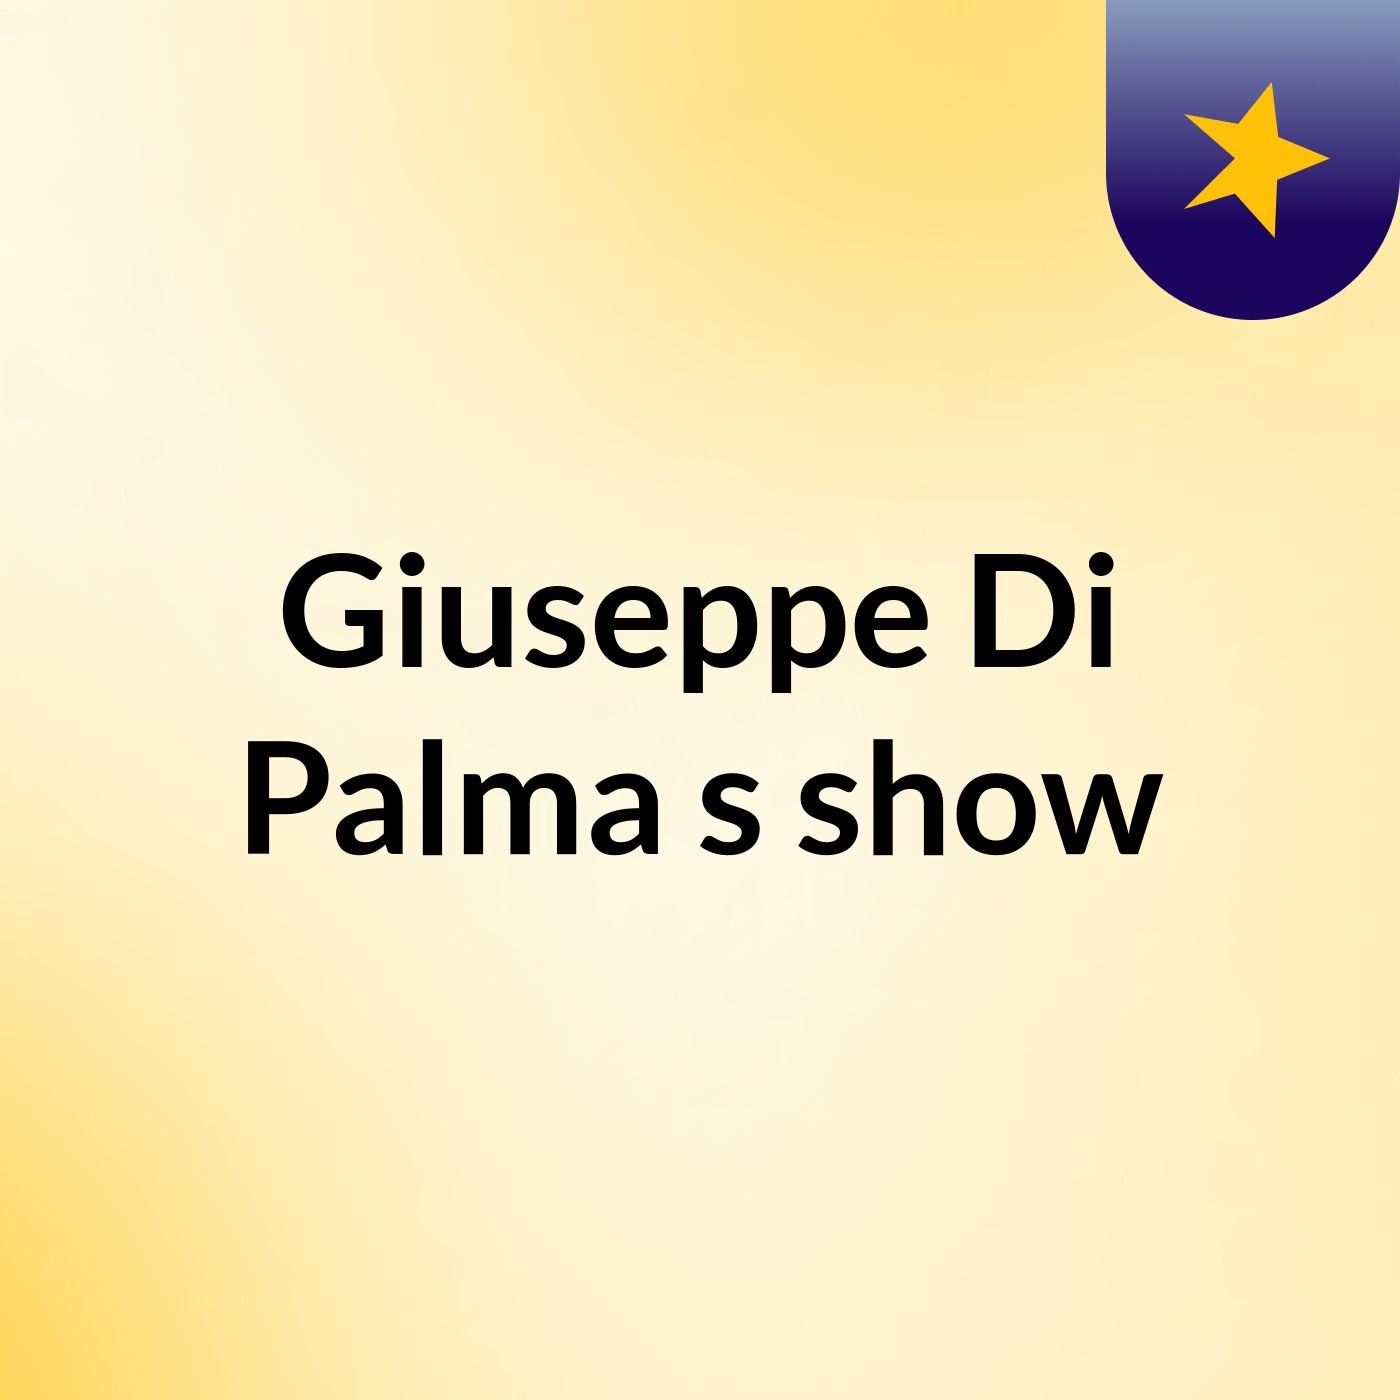 Giuseppe Di Palma's show